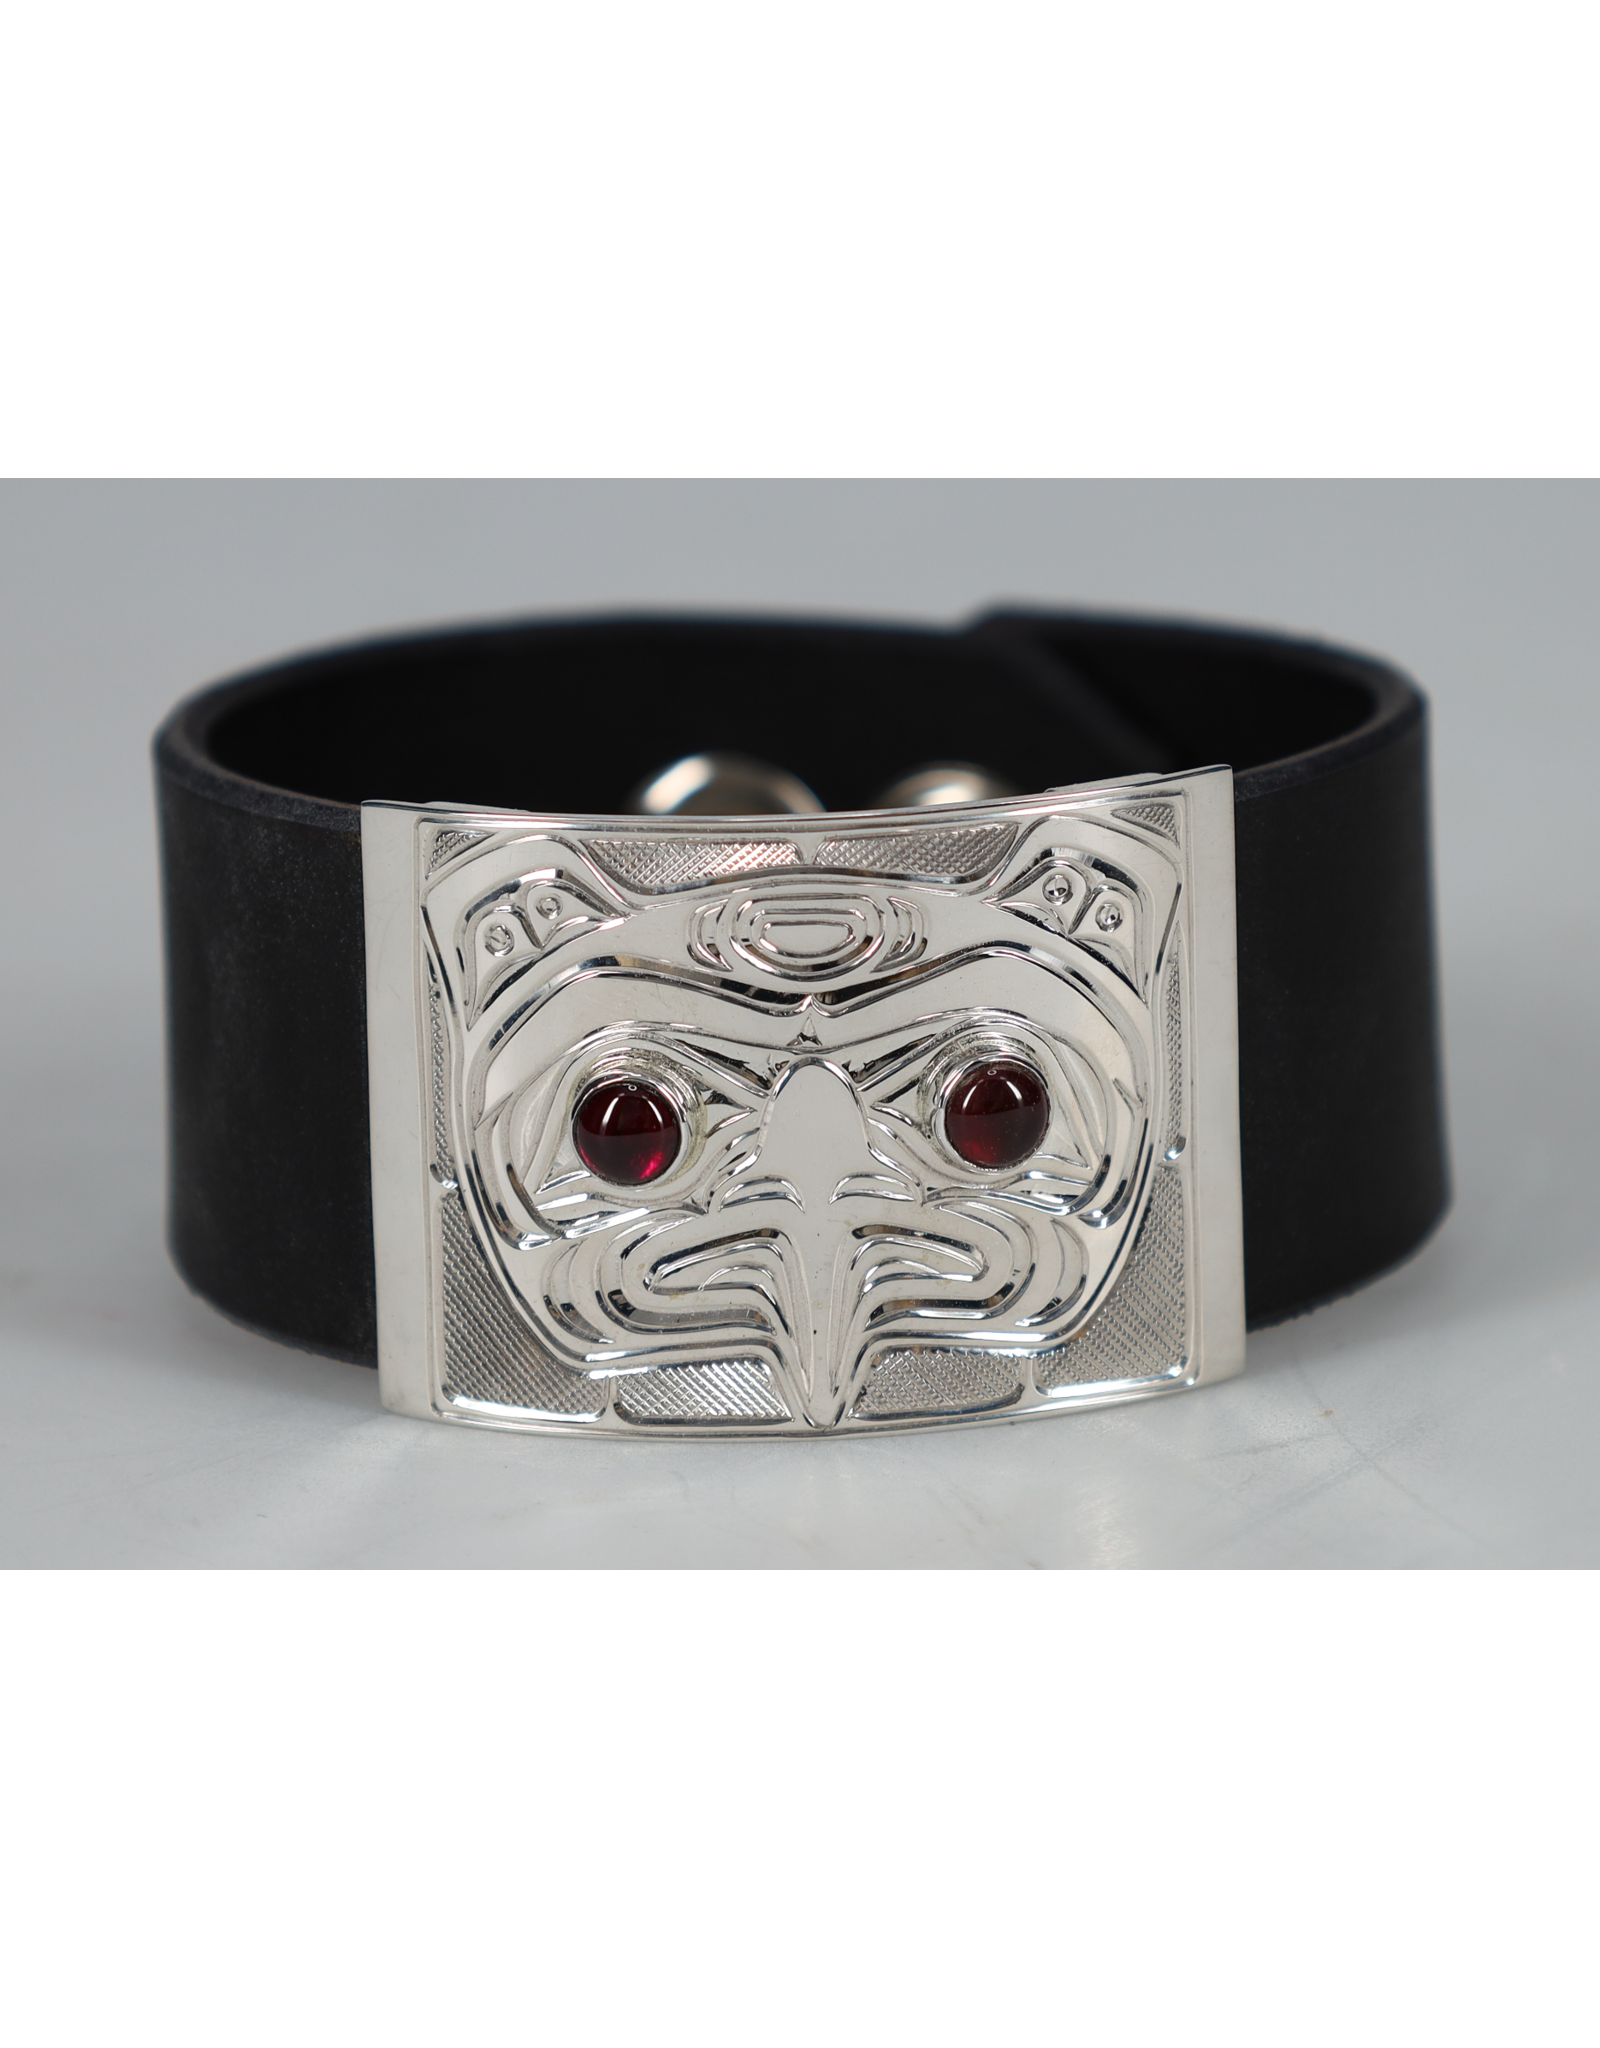 Chris Cook Leather Bracelet - Eagle with Garnet - CCB01